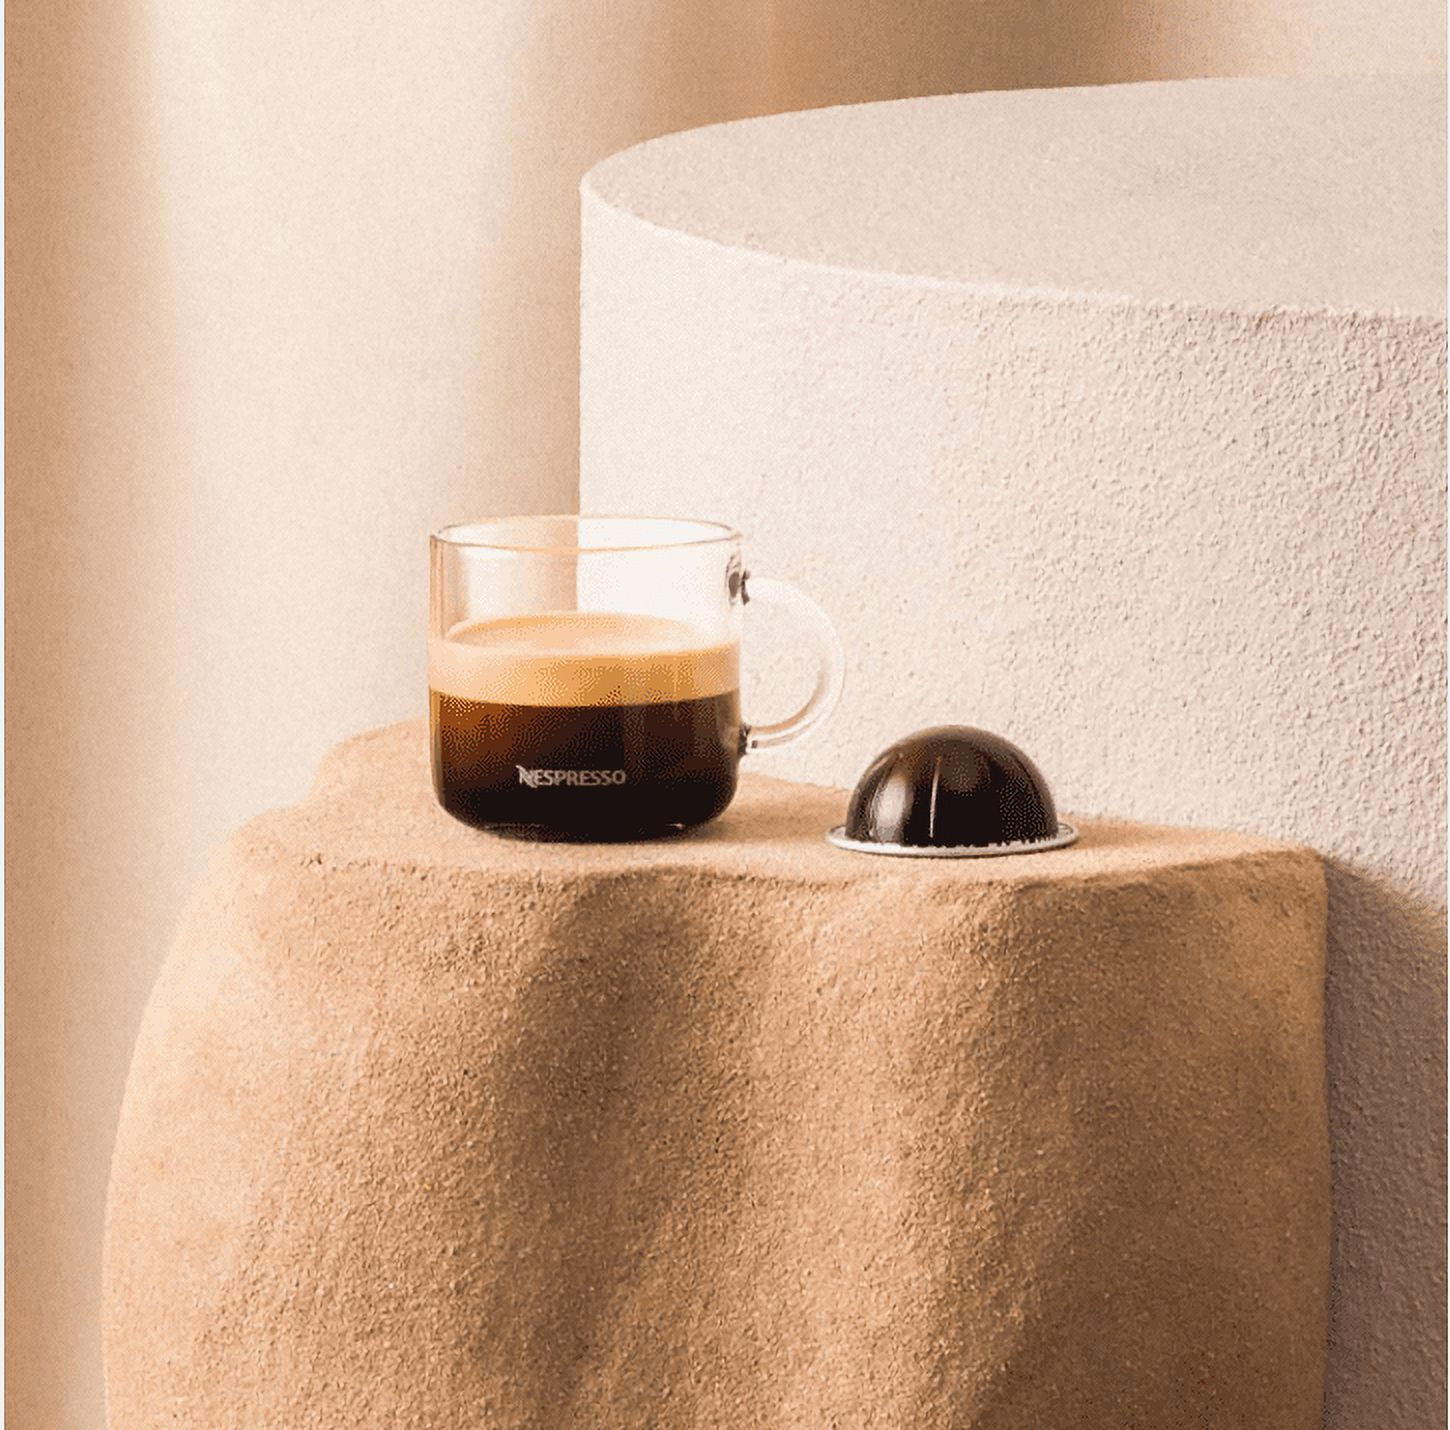 Nespresso Double Espresso Chiaro, Medium Roast Coffee Pods, 40 Ct